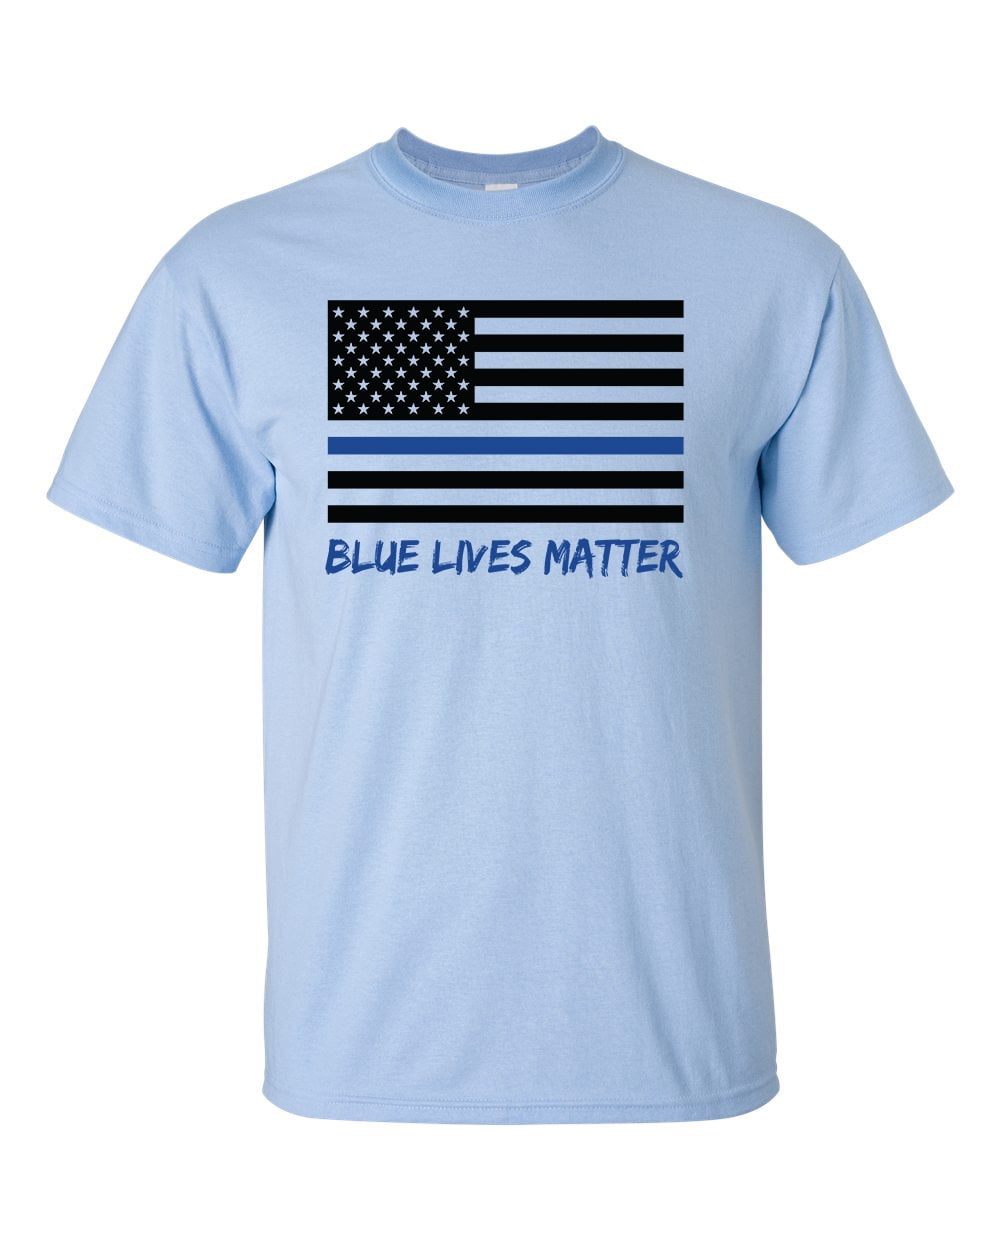 Trenz Shirt Company Patriot Pride Men's Distressed American Flag Patriotic Short Sleeve T-Shirt Graphic Tee-Light Blue Tie dye-XL